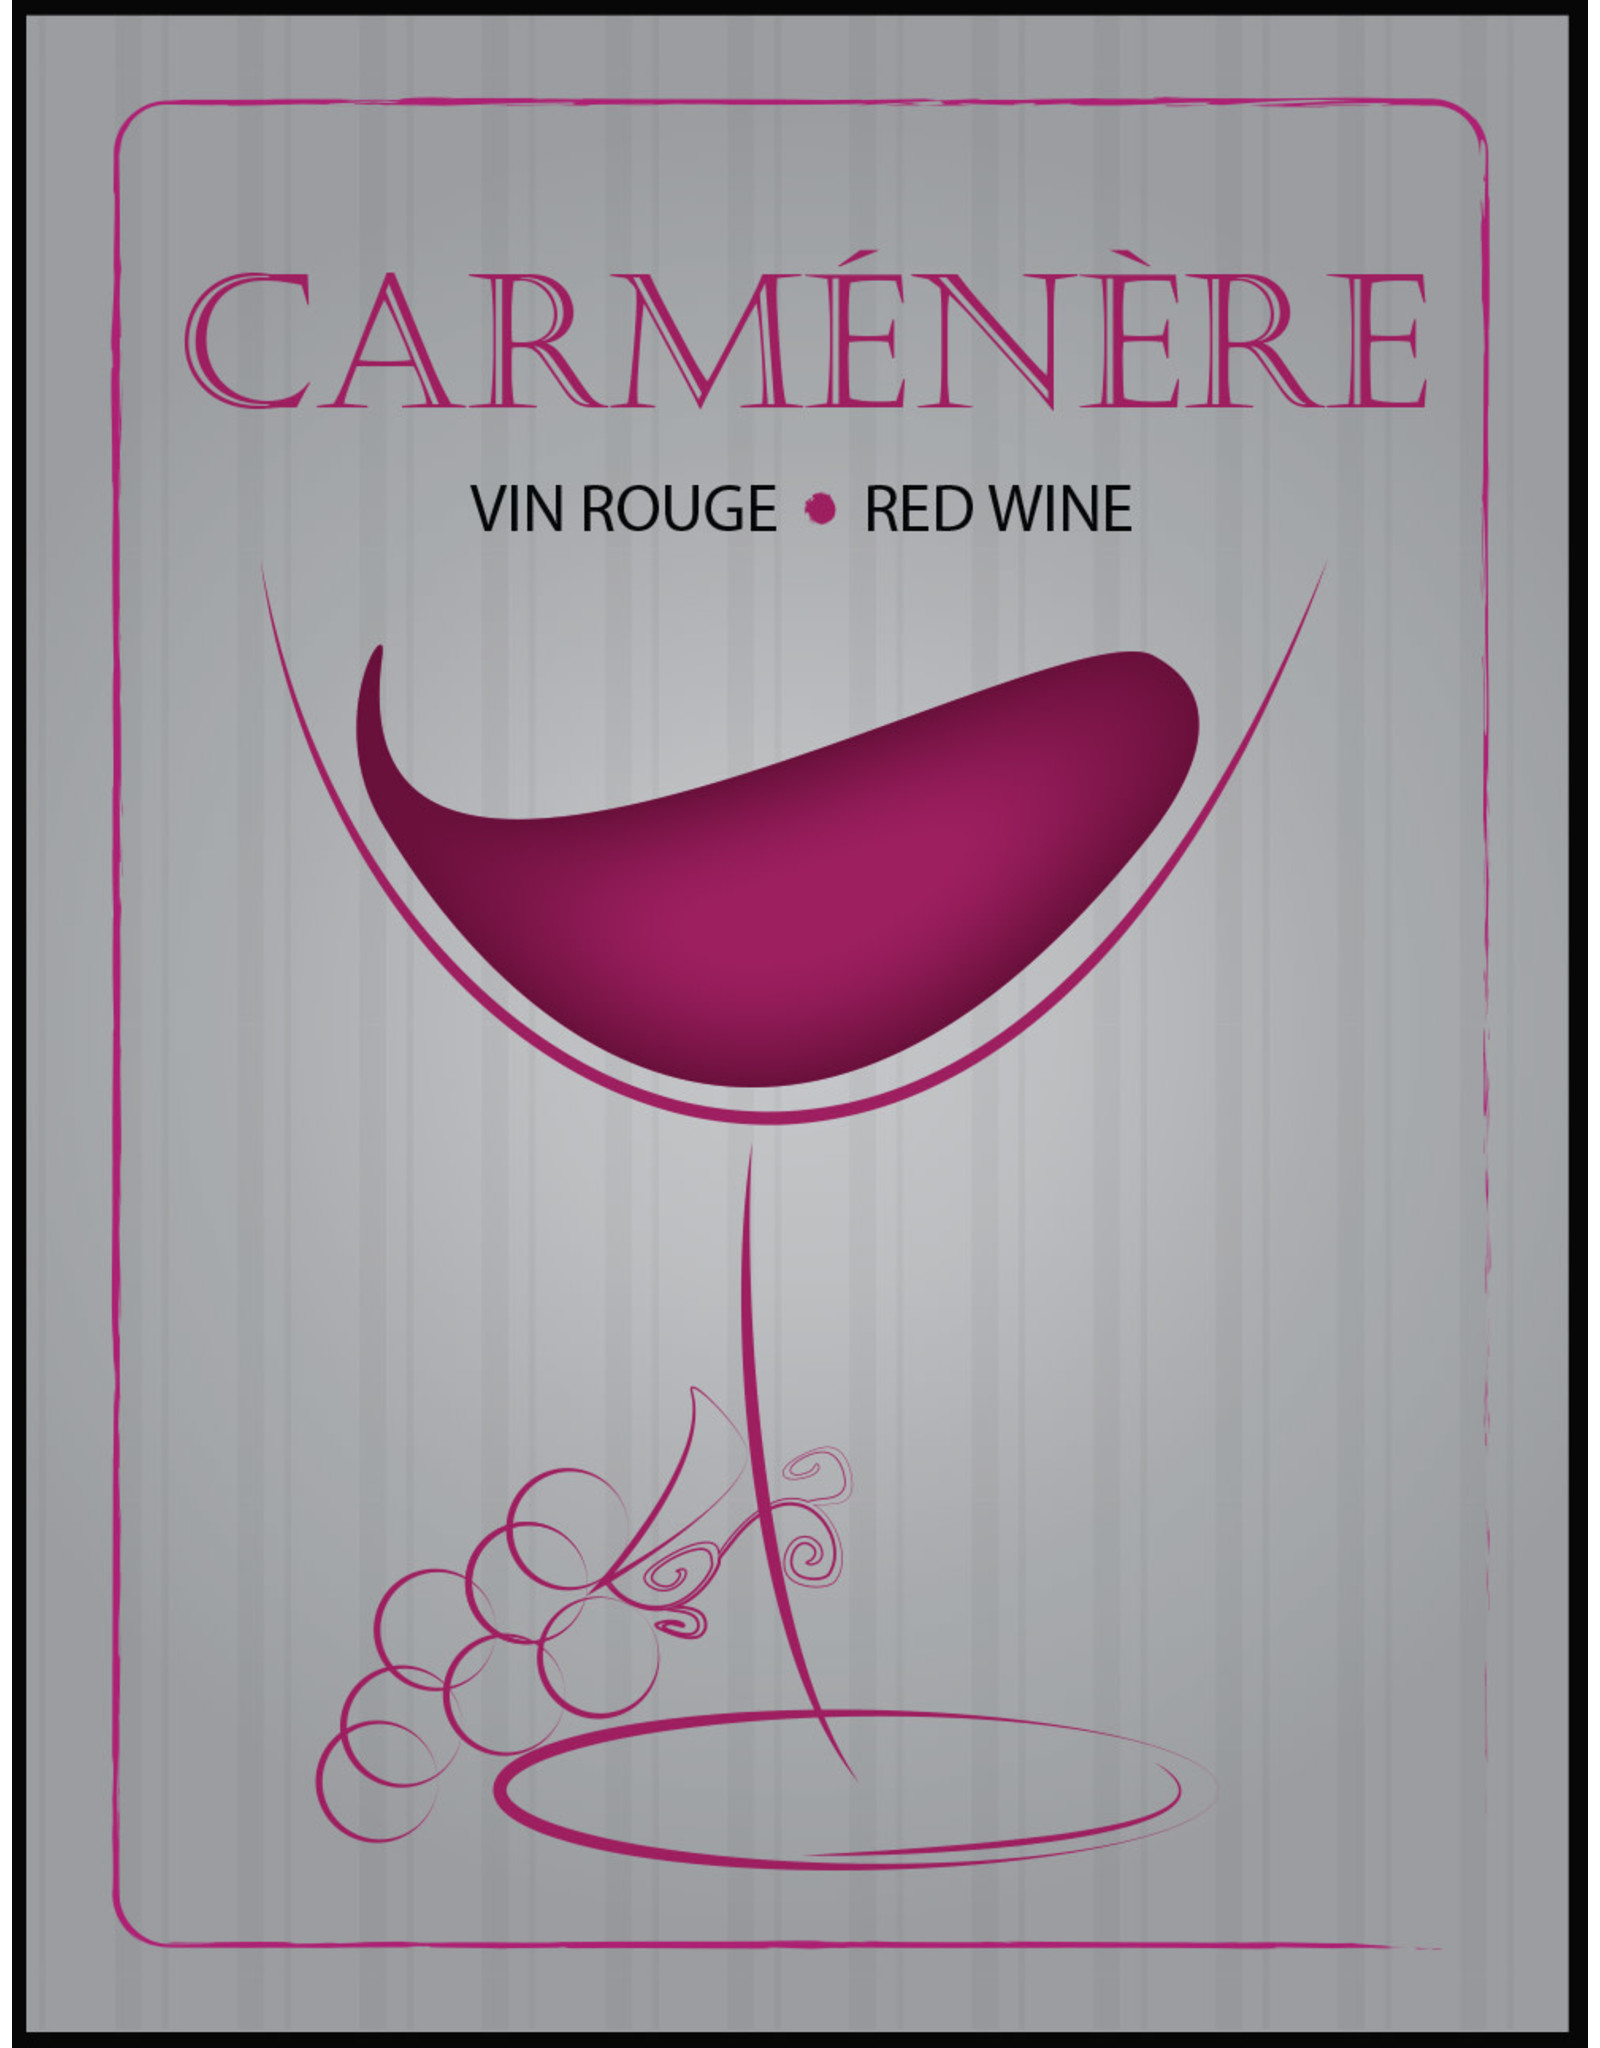 LD Carlson Carmenere 30 ct Wine Labels